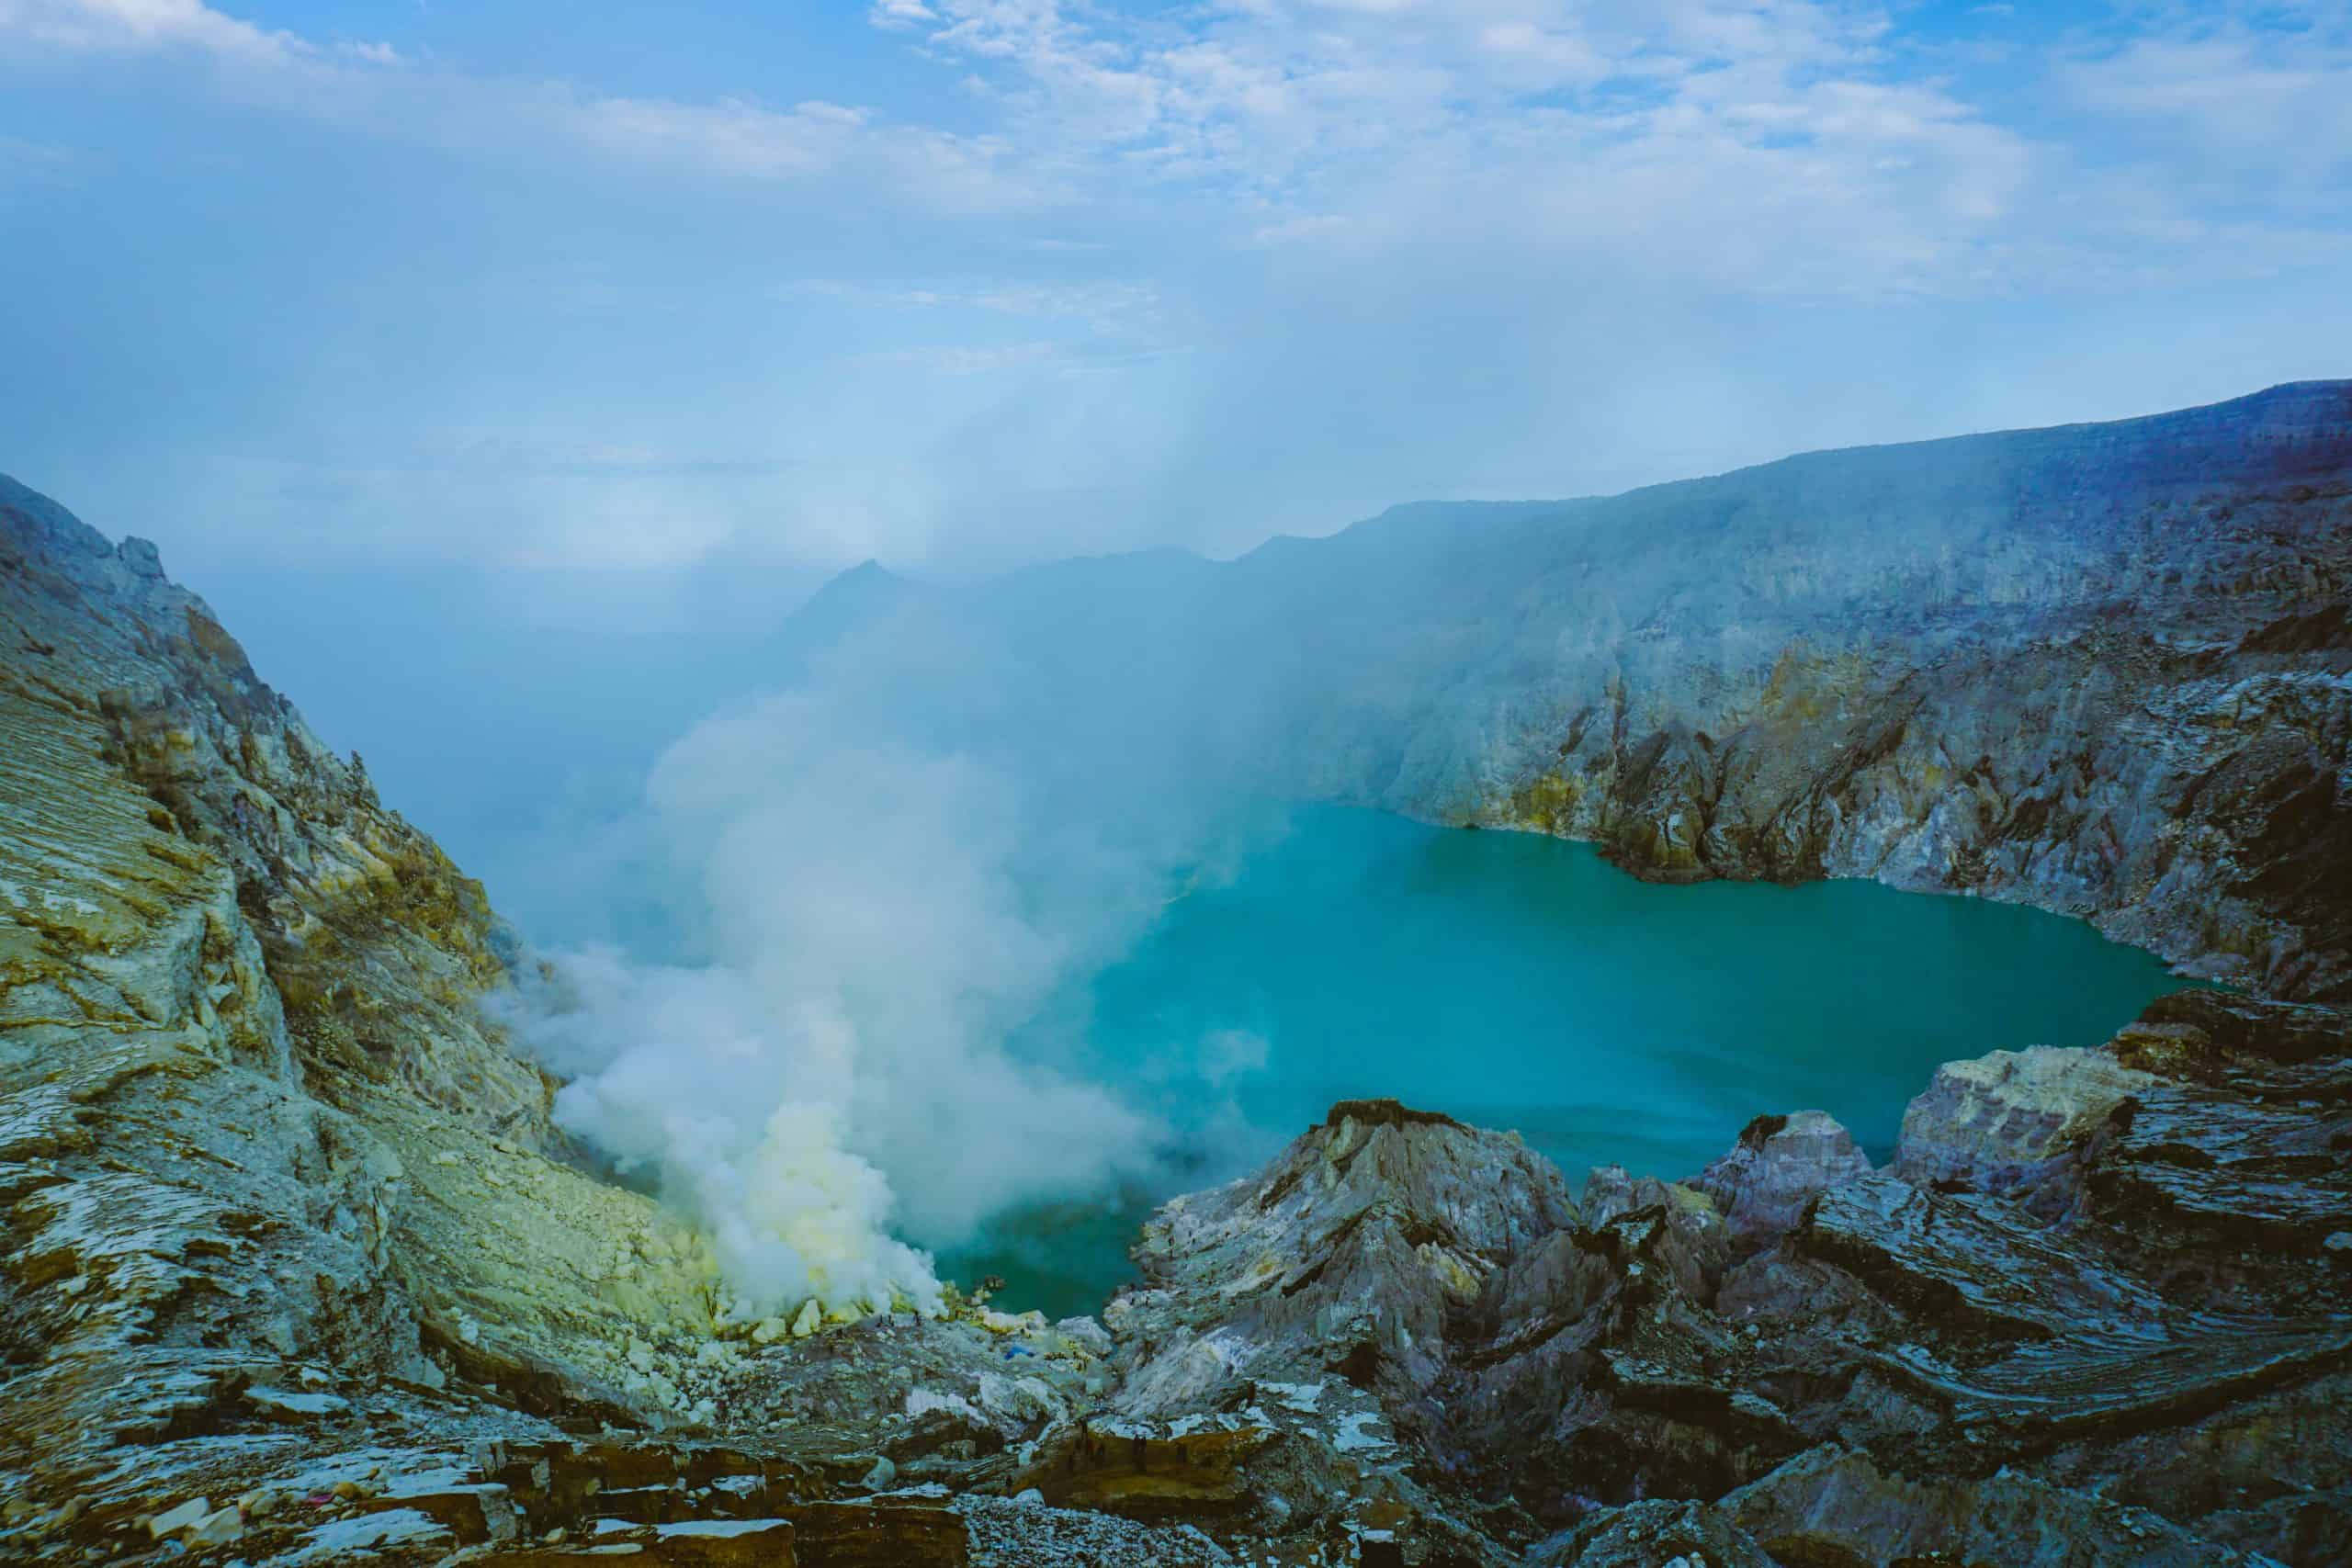 The stunning blue Ijen Crater Lake